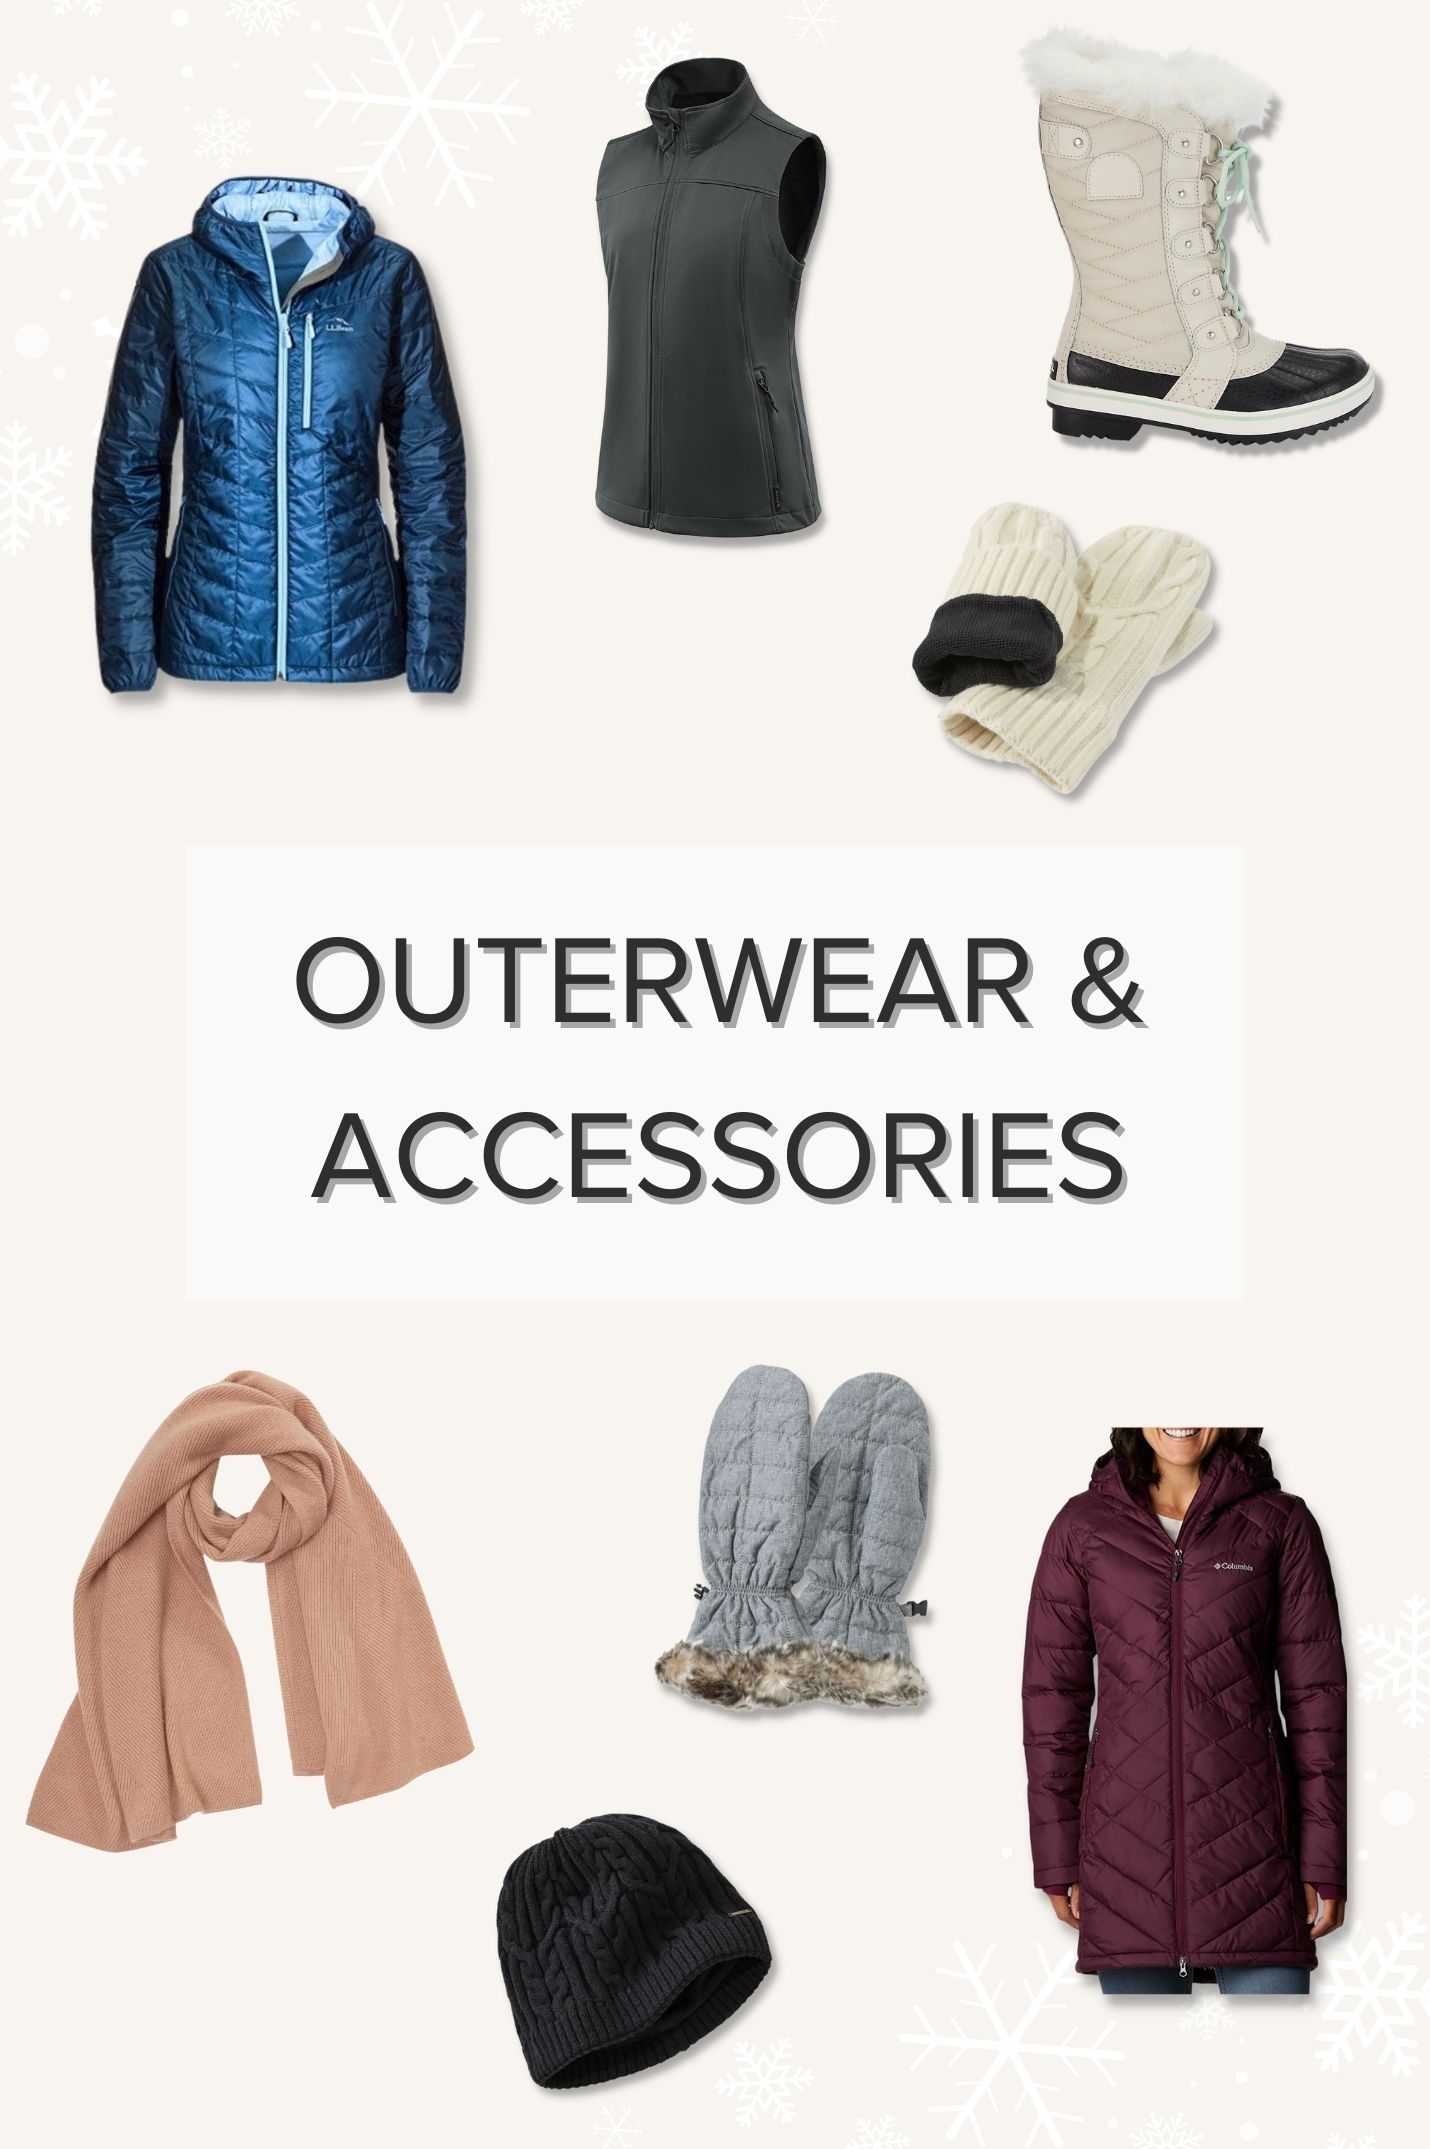 Winter Travel Outerwear & Accessories